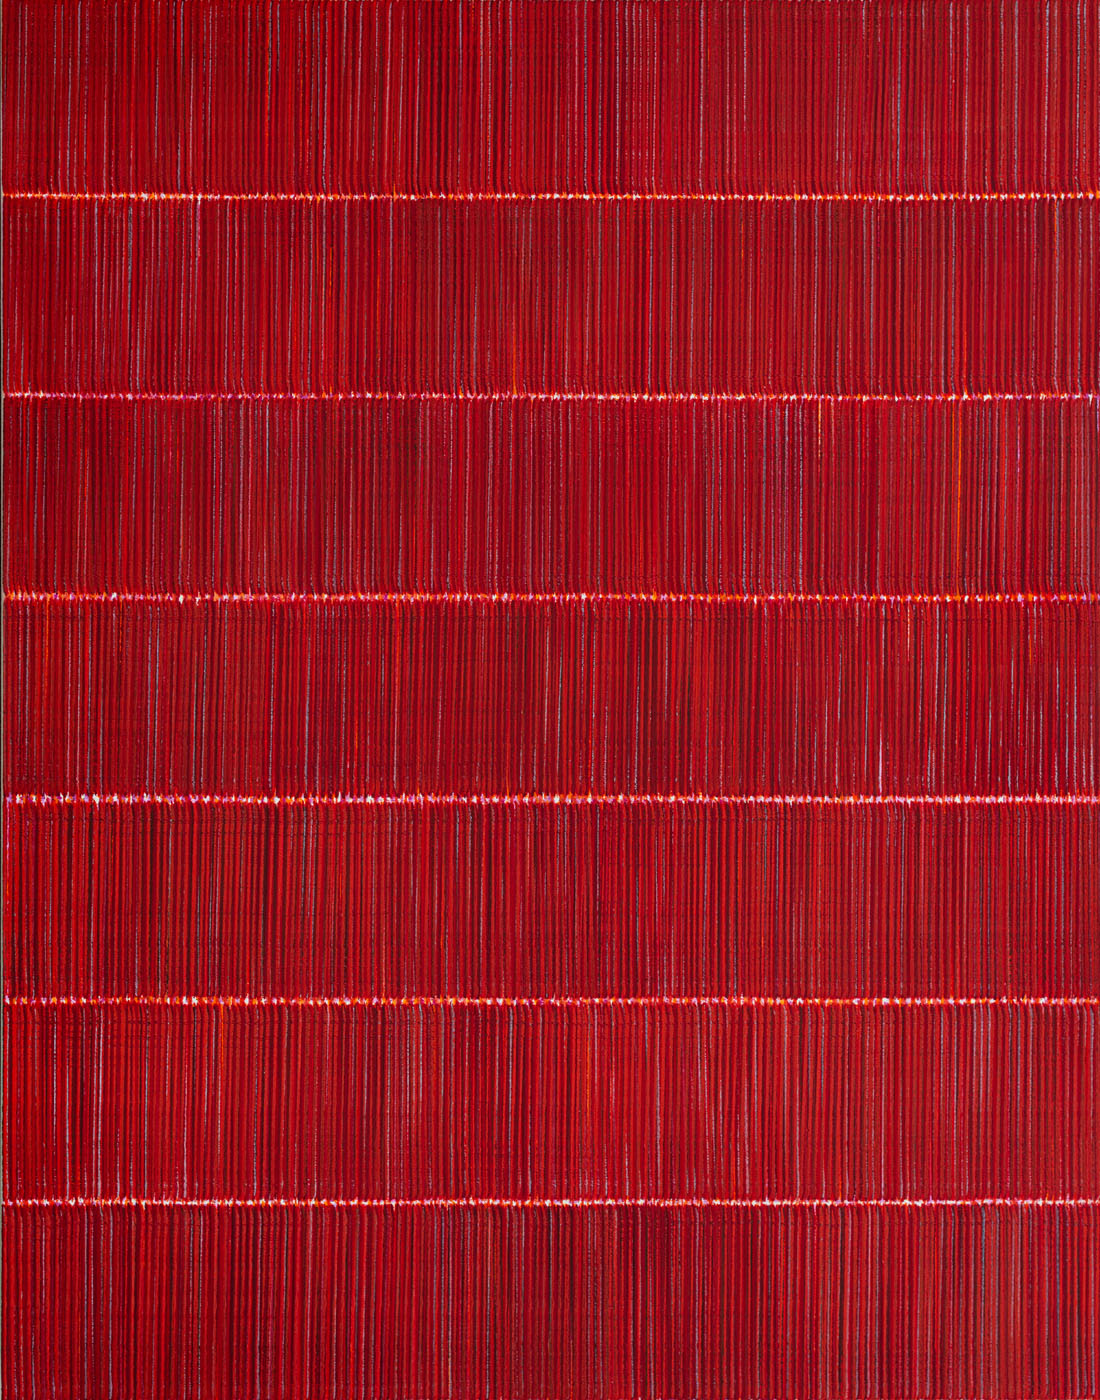 Nikola Dimitrov, FarbKlang VI 2019, Pigmente, Bindemittel auf Leinwand, 140 ×110 cm